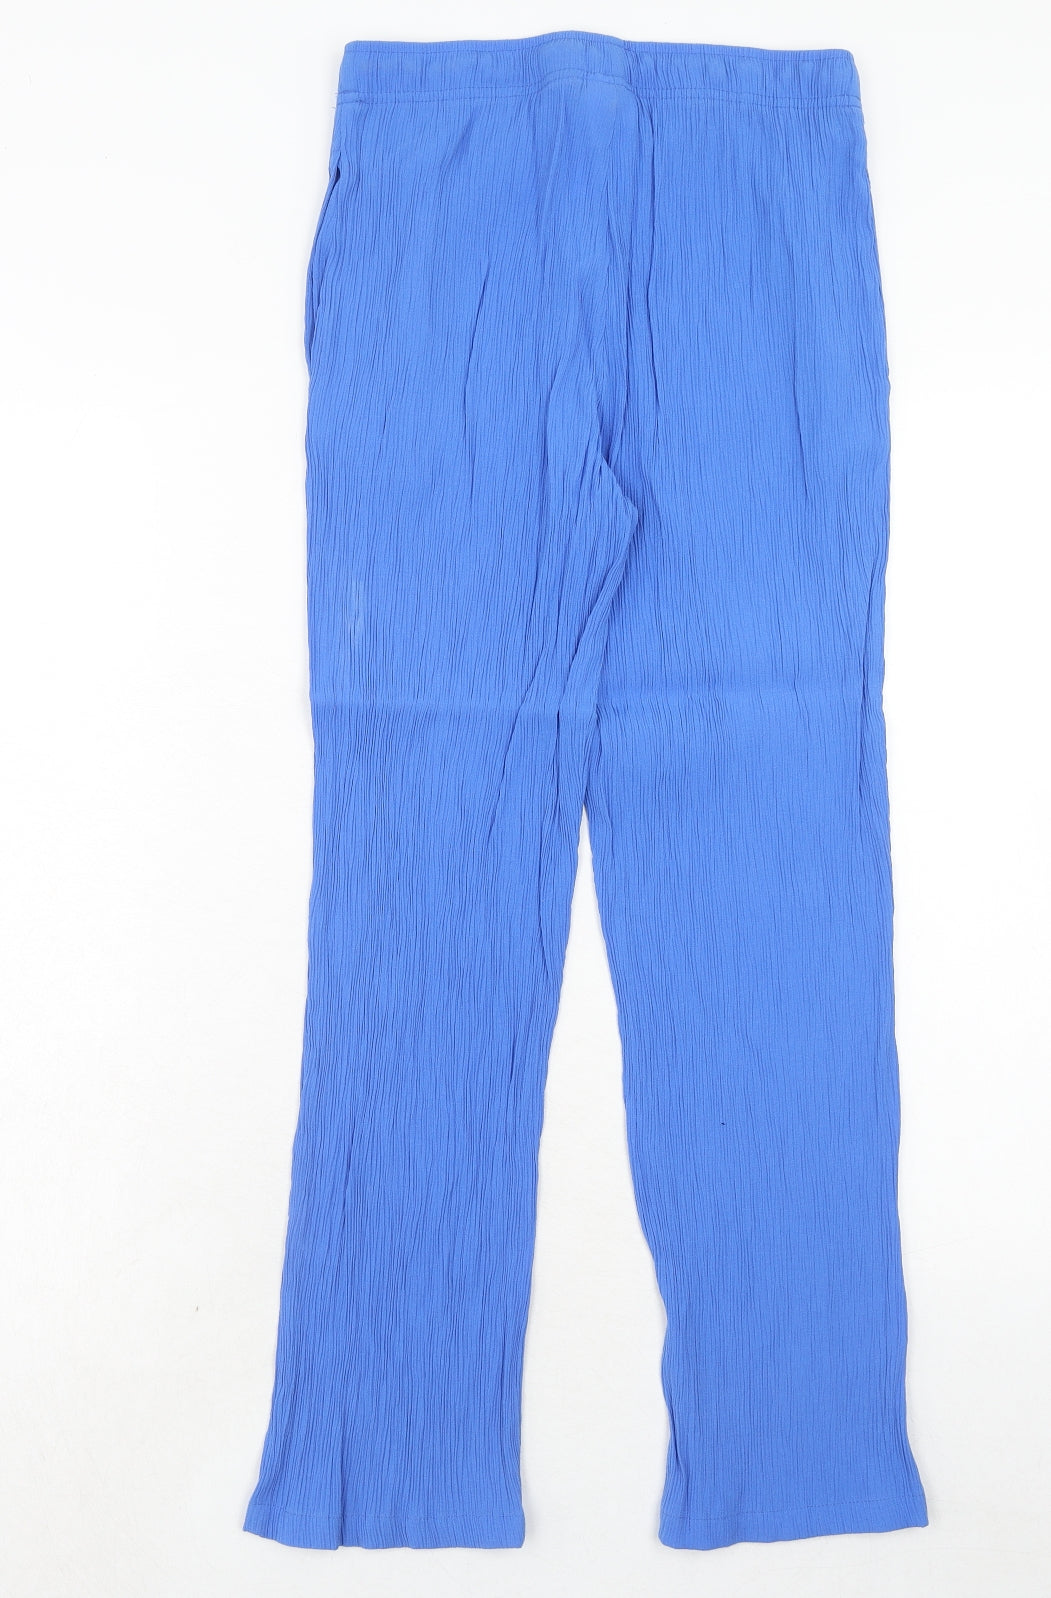 Damart Womens Blue Viscose Trousers Size 10 L27 in Regular Drawstring